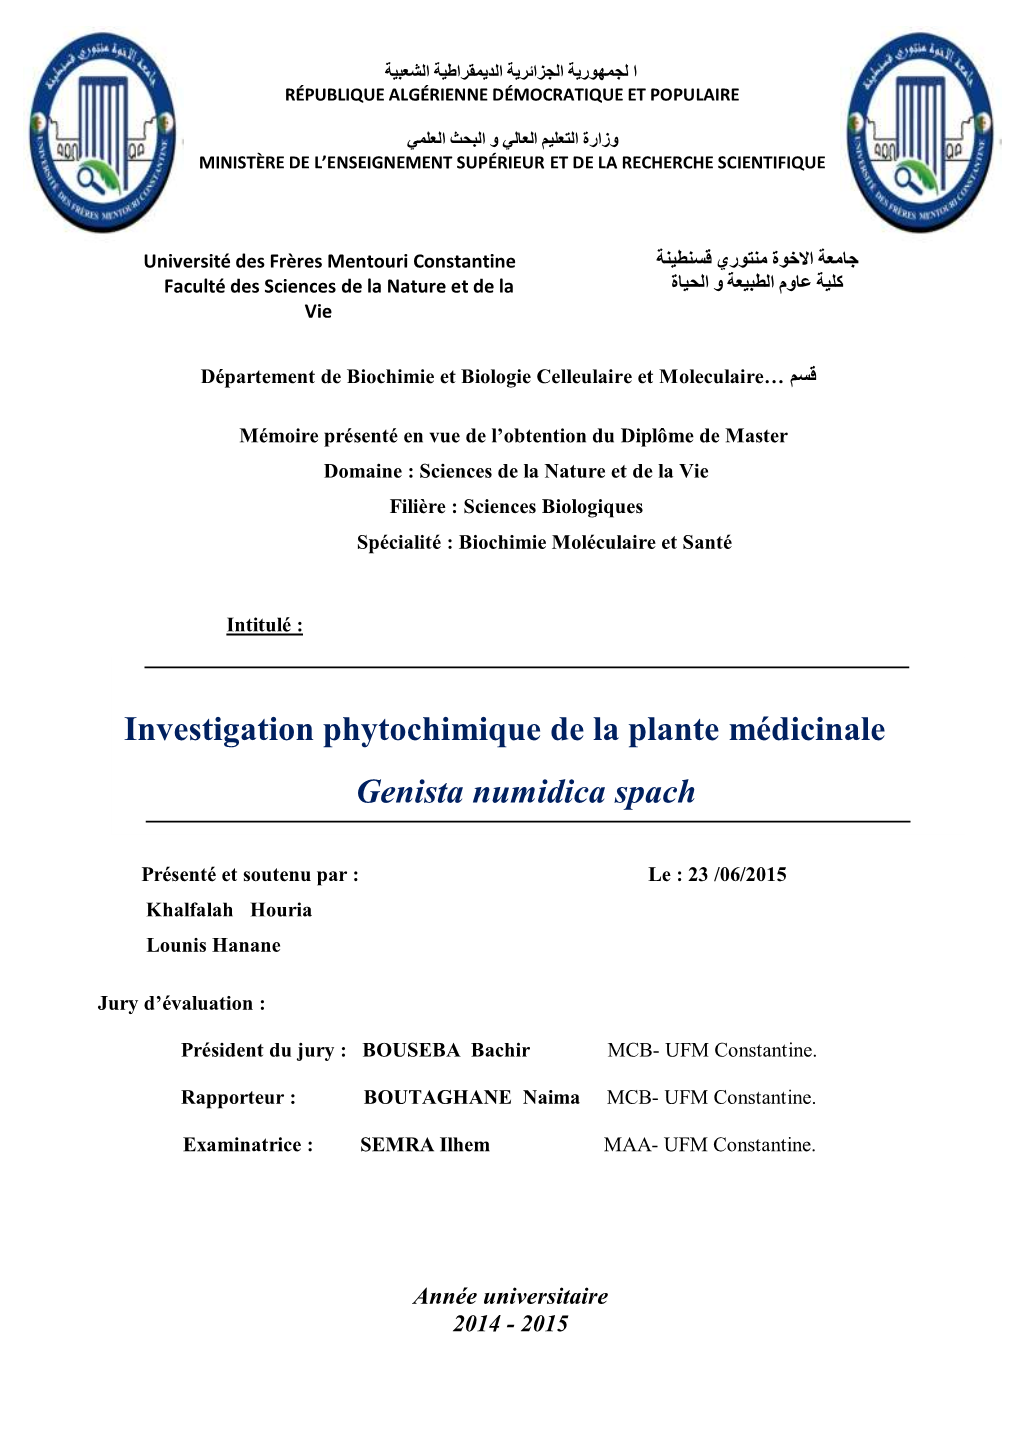 146- Investigation Phytochimique De La Plante Médicinale Genista